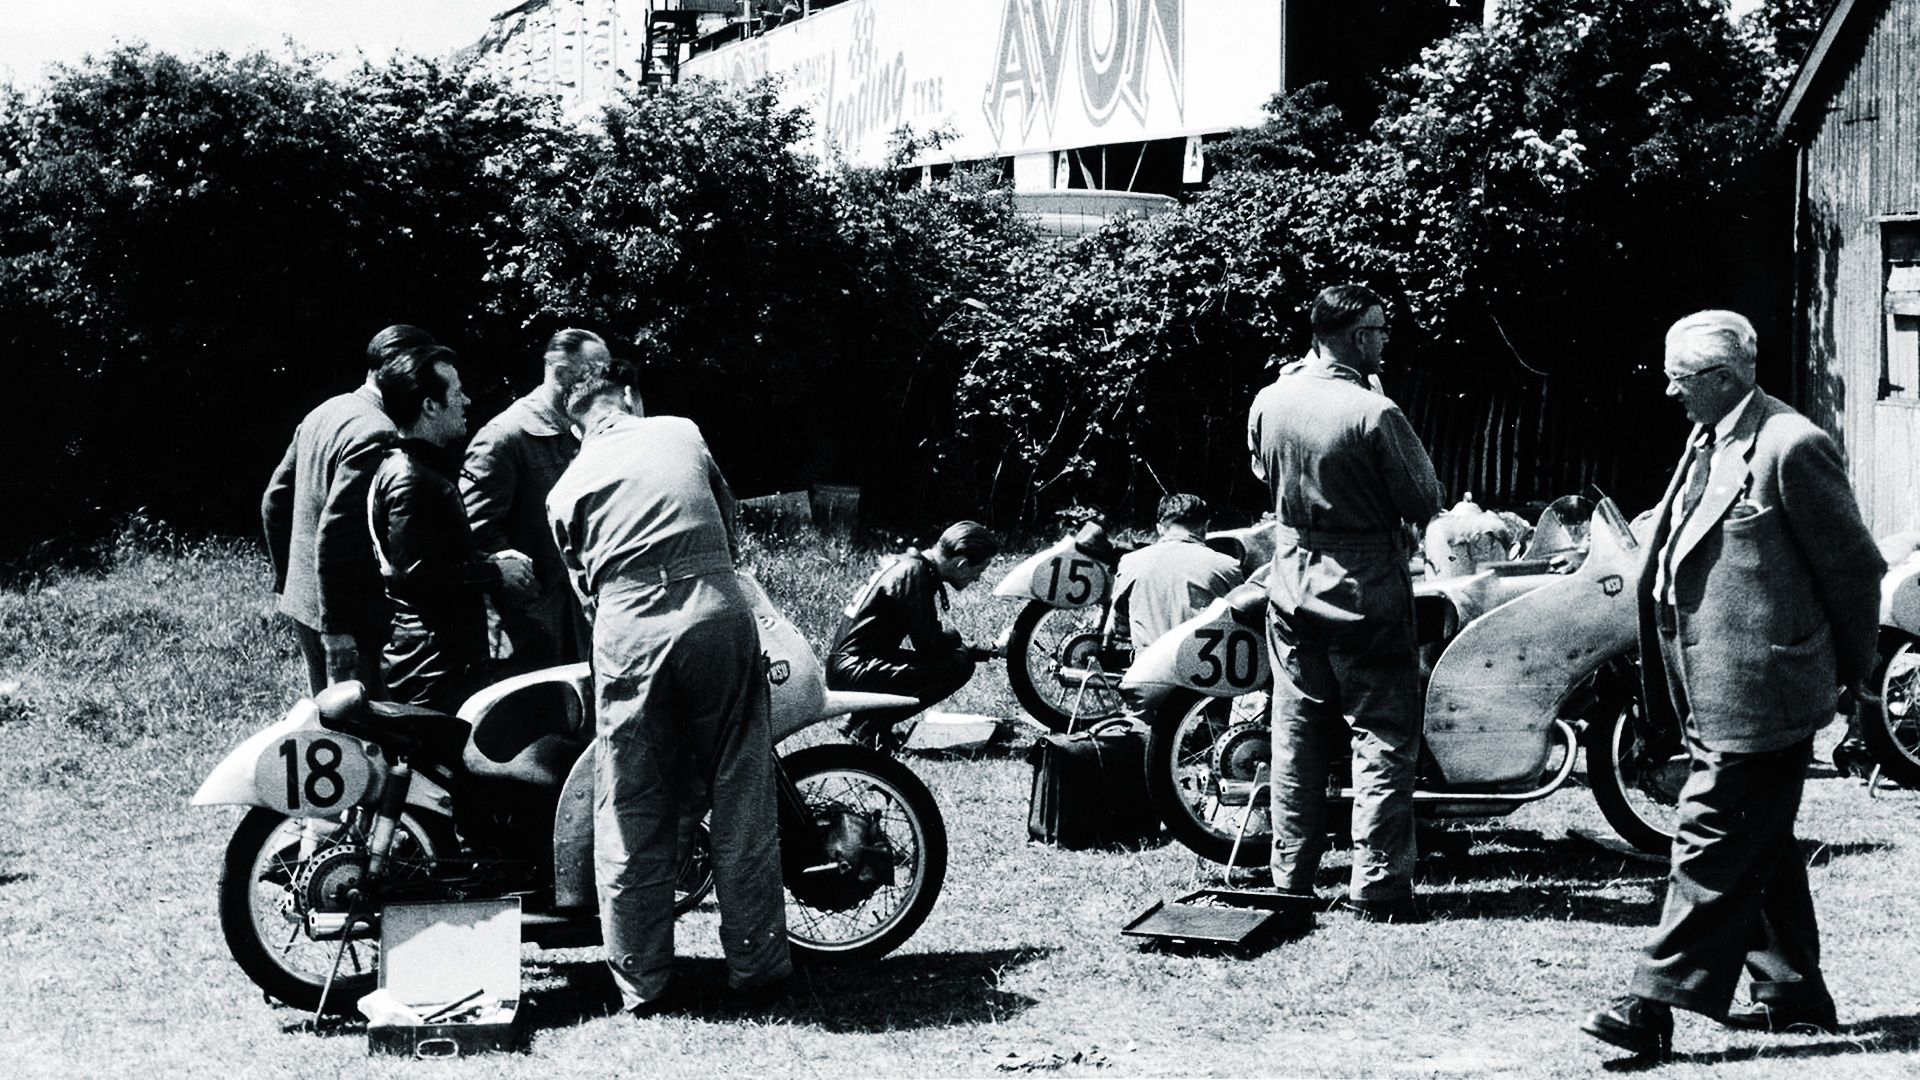 NSU motorcycles